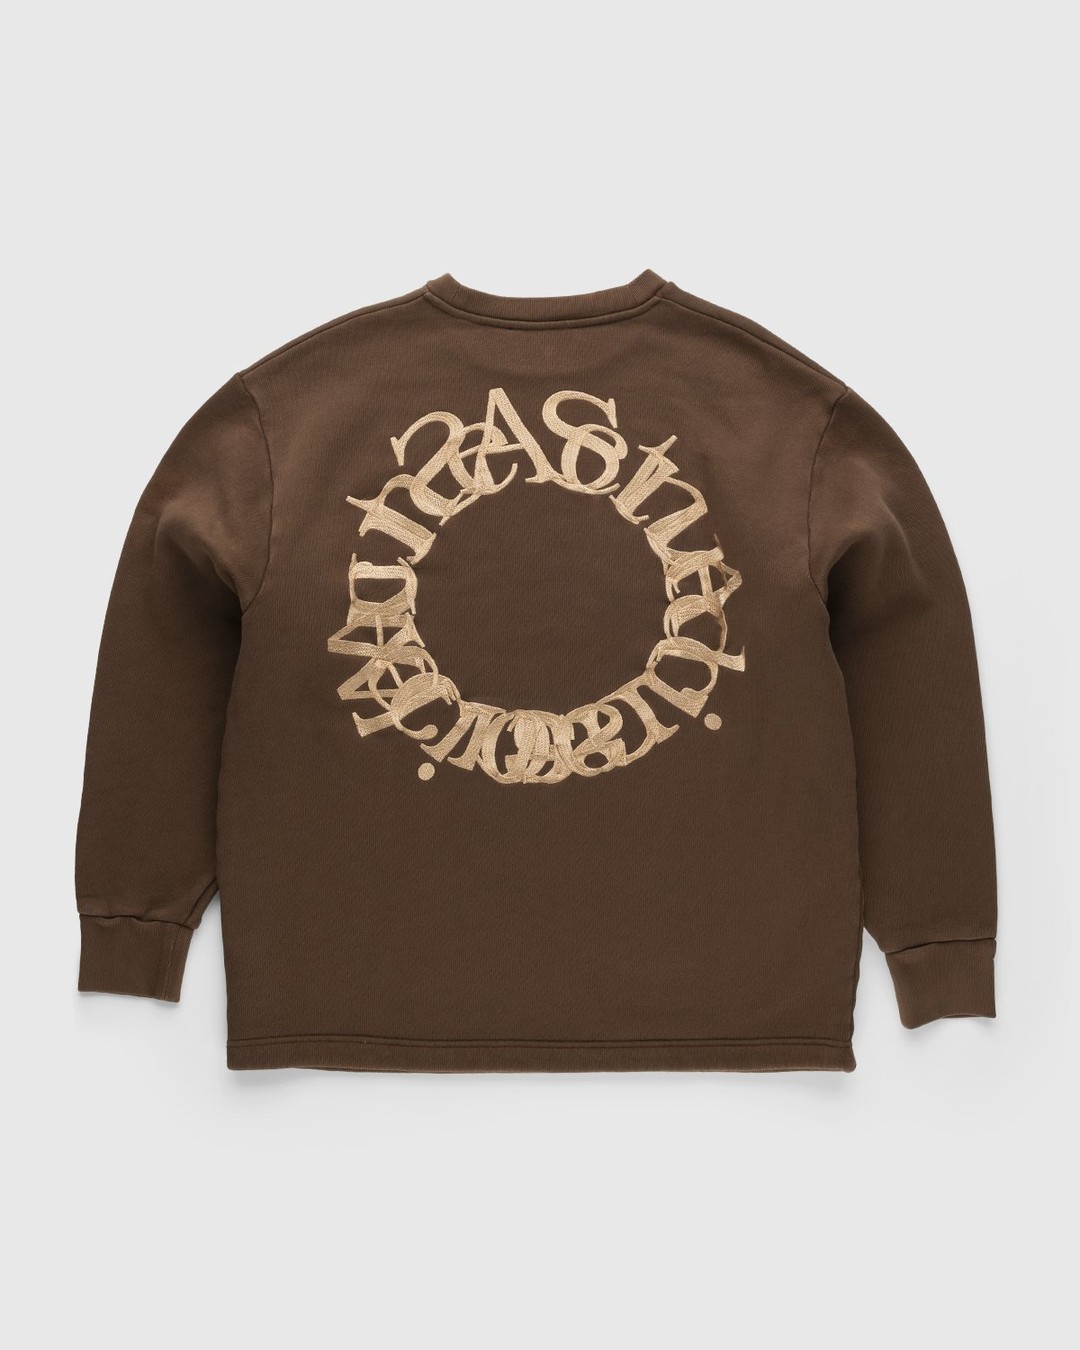 Acne Studios – Logo Sweatshirt Chocolate Brown - Sweatshirts - Brown - Image 1